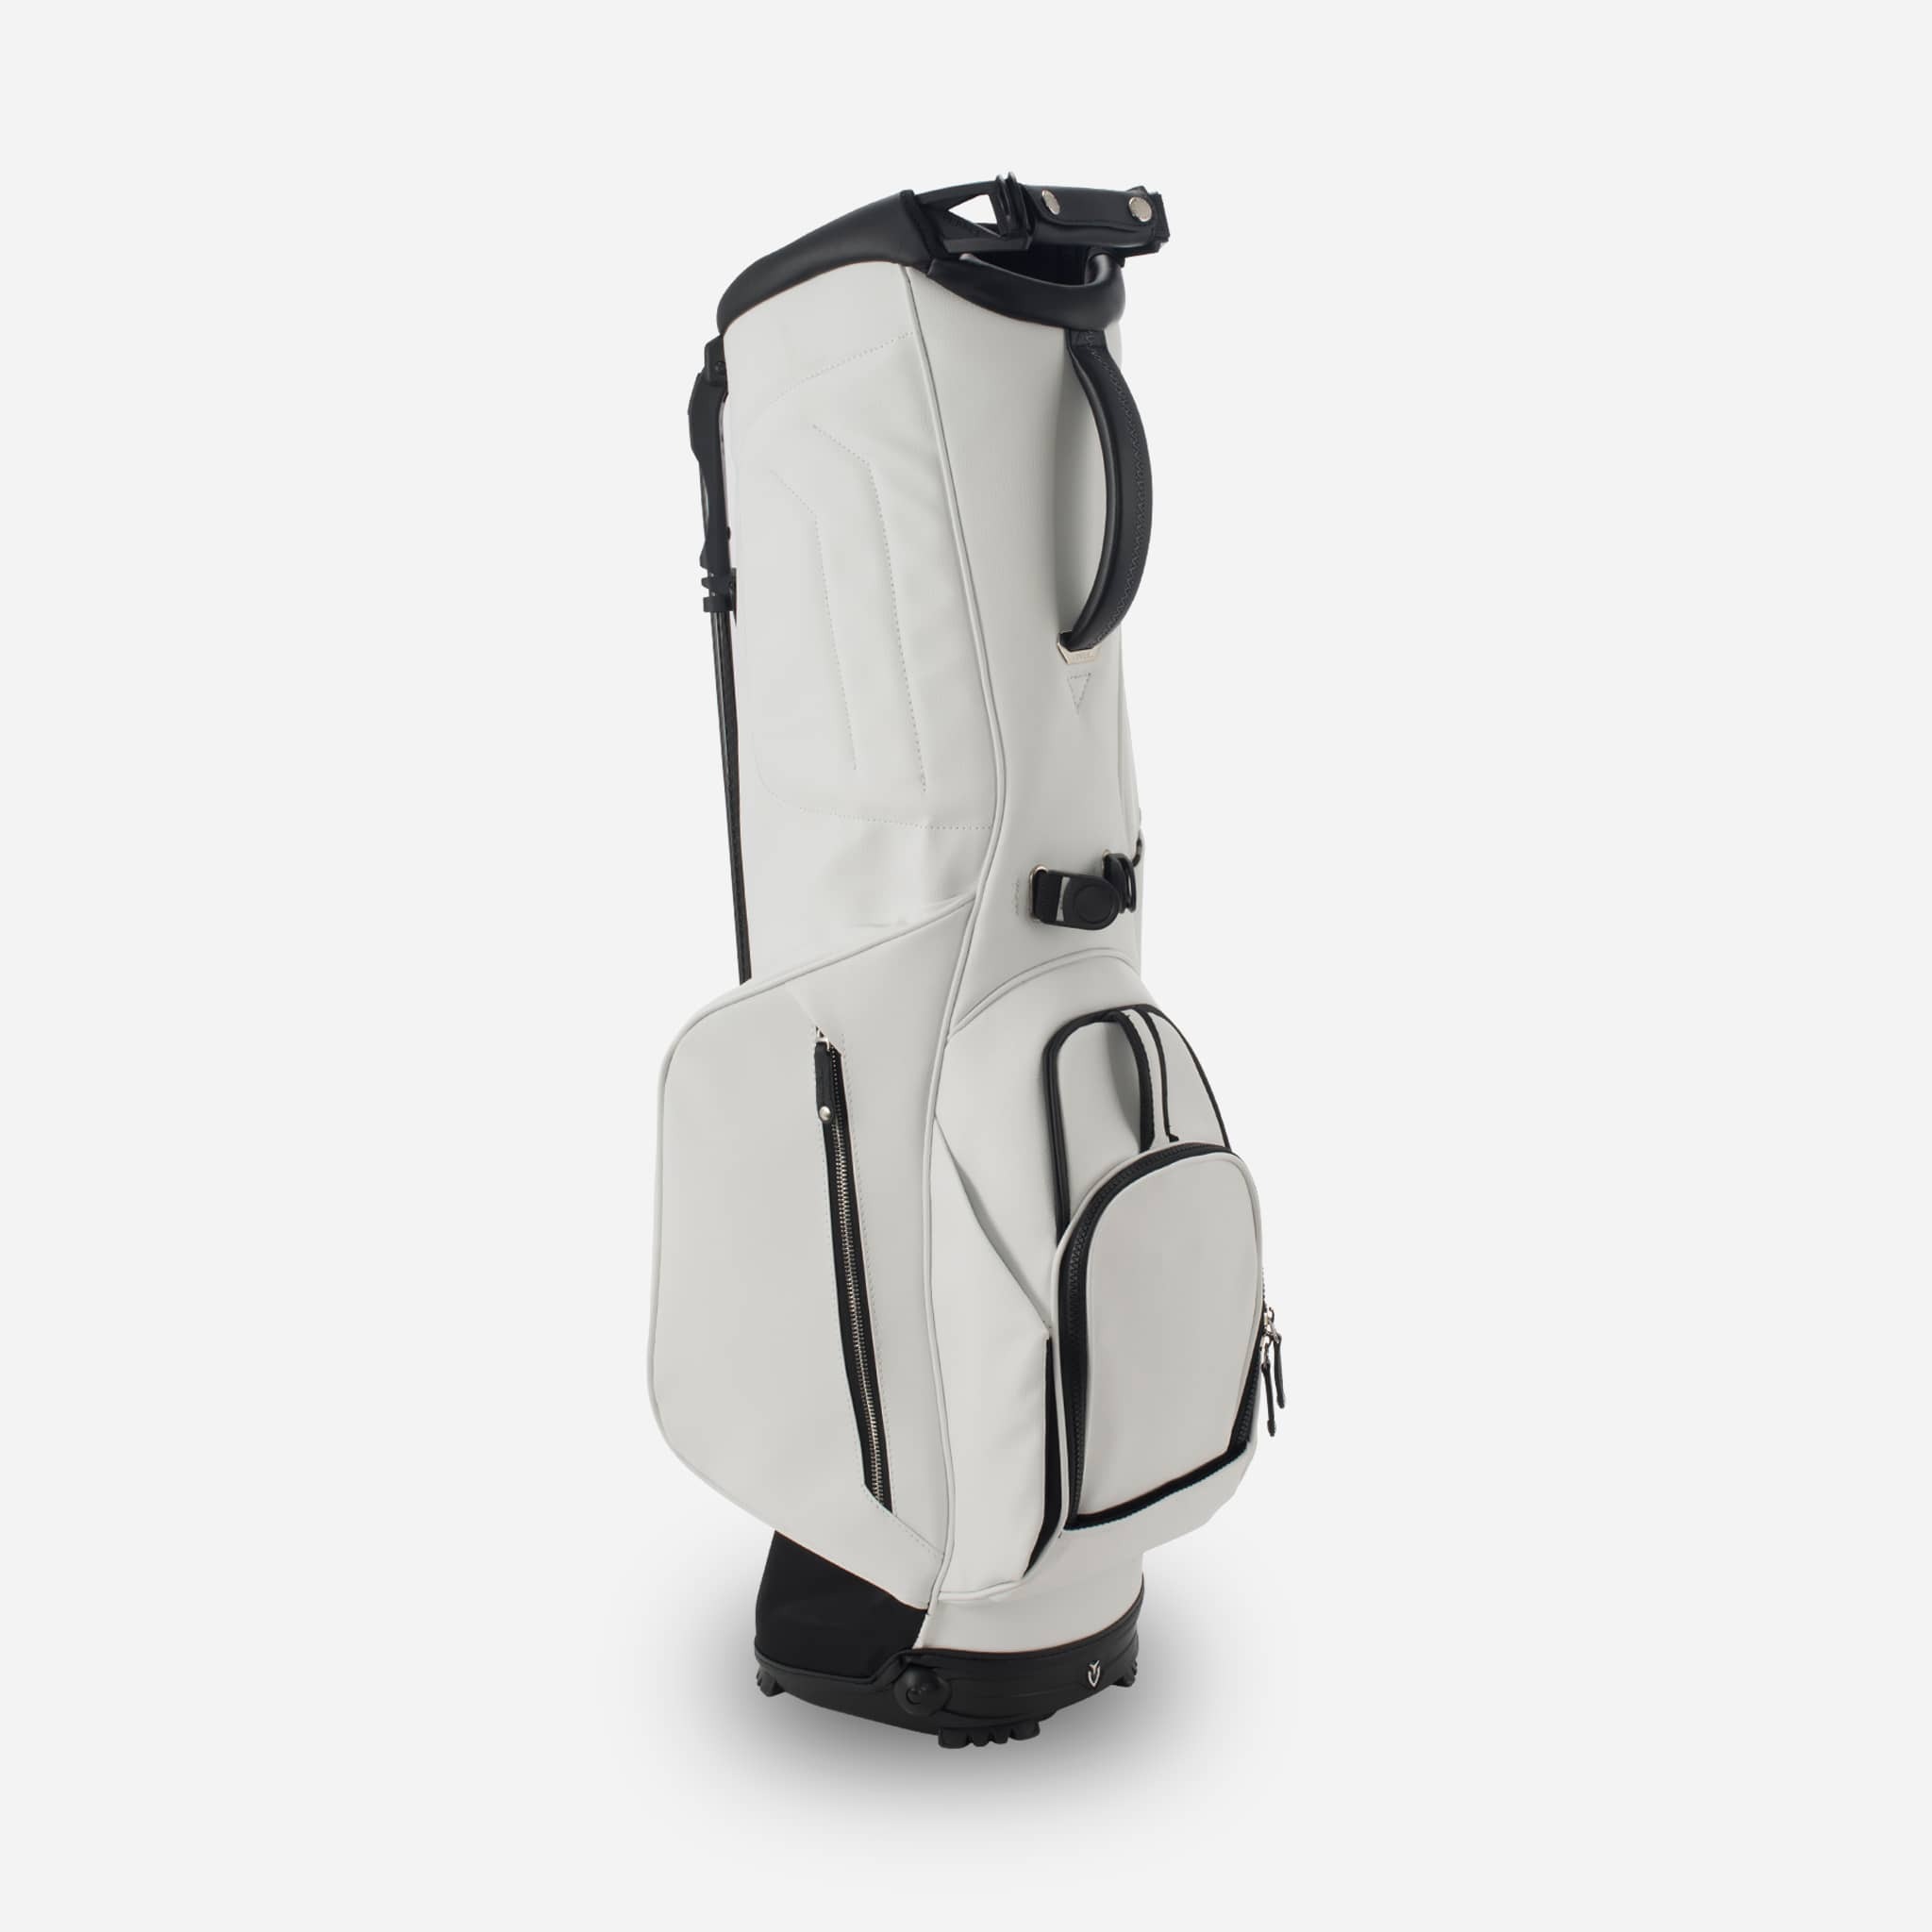 VLS LUX 旗艦腳架袋【VESSEL】高爾夫球袋品牌首選